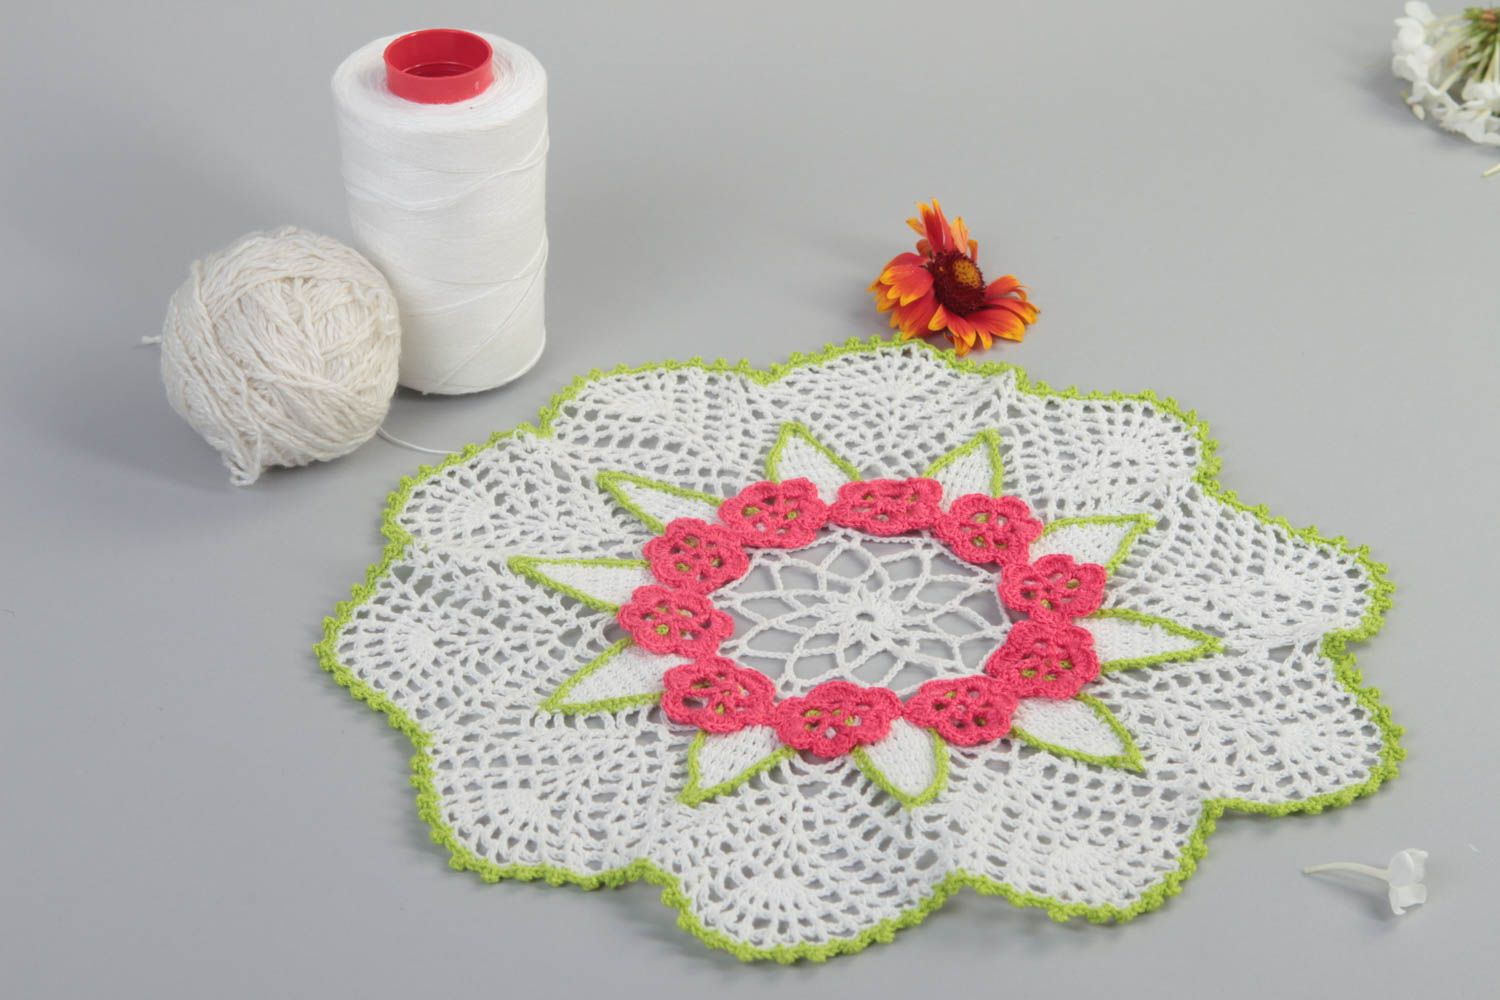 Openwork crocheted napkin stylish handmade kitchen decor textile for home photo 1